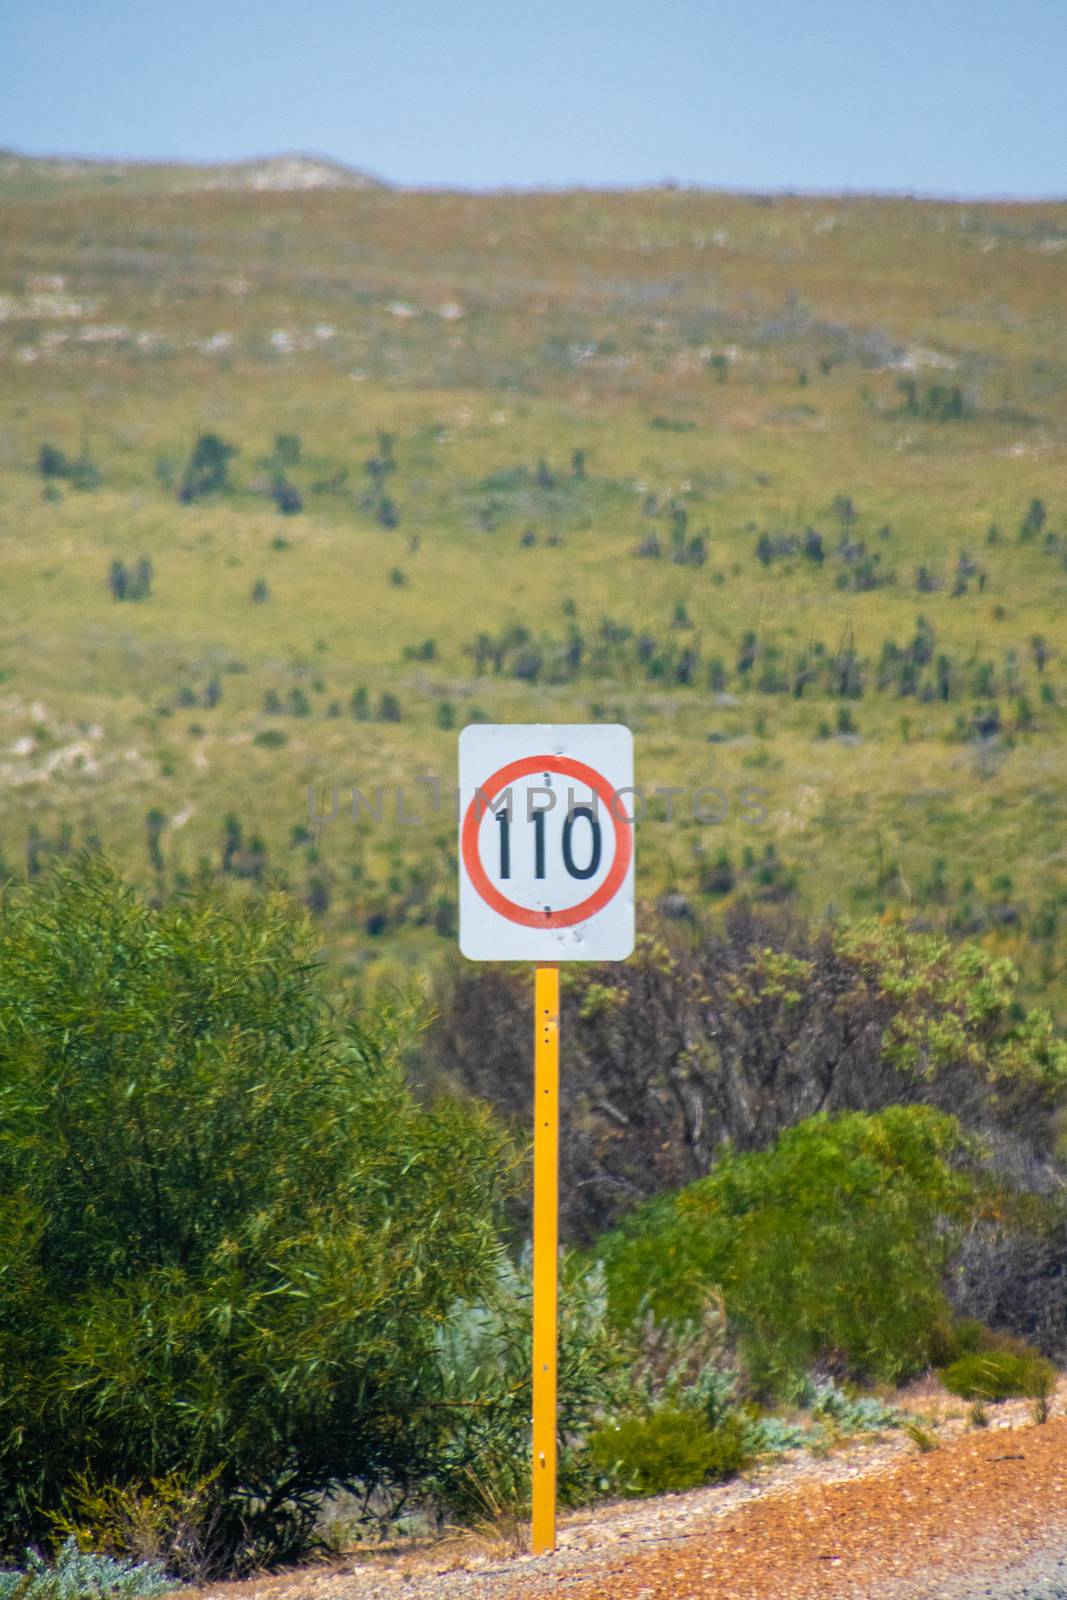 Speed limit 110 kph street sign next to an Australian road